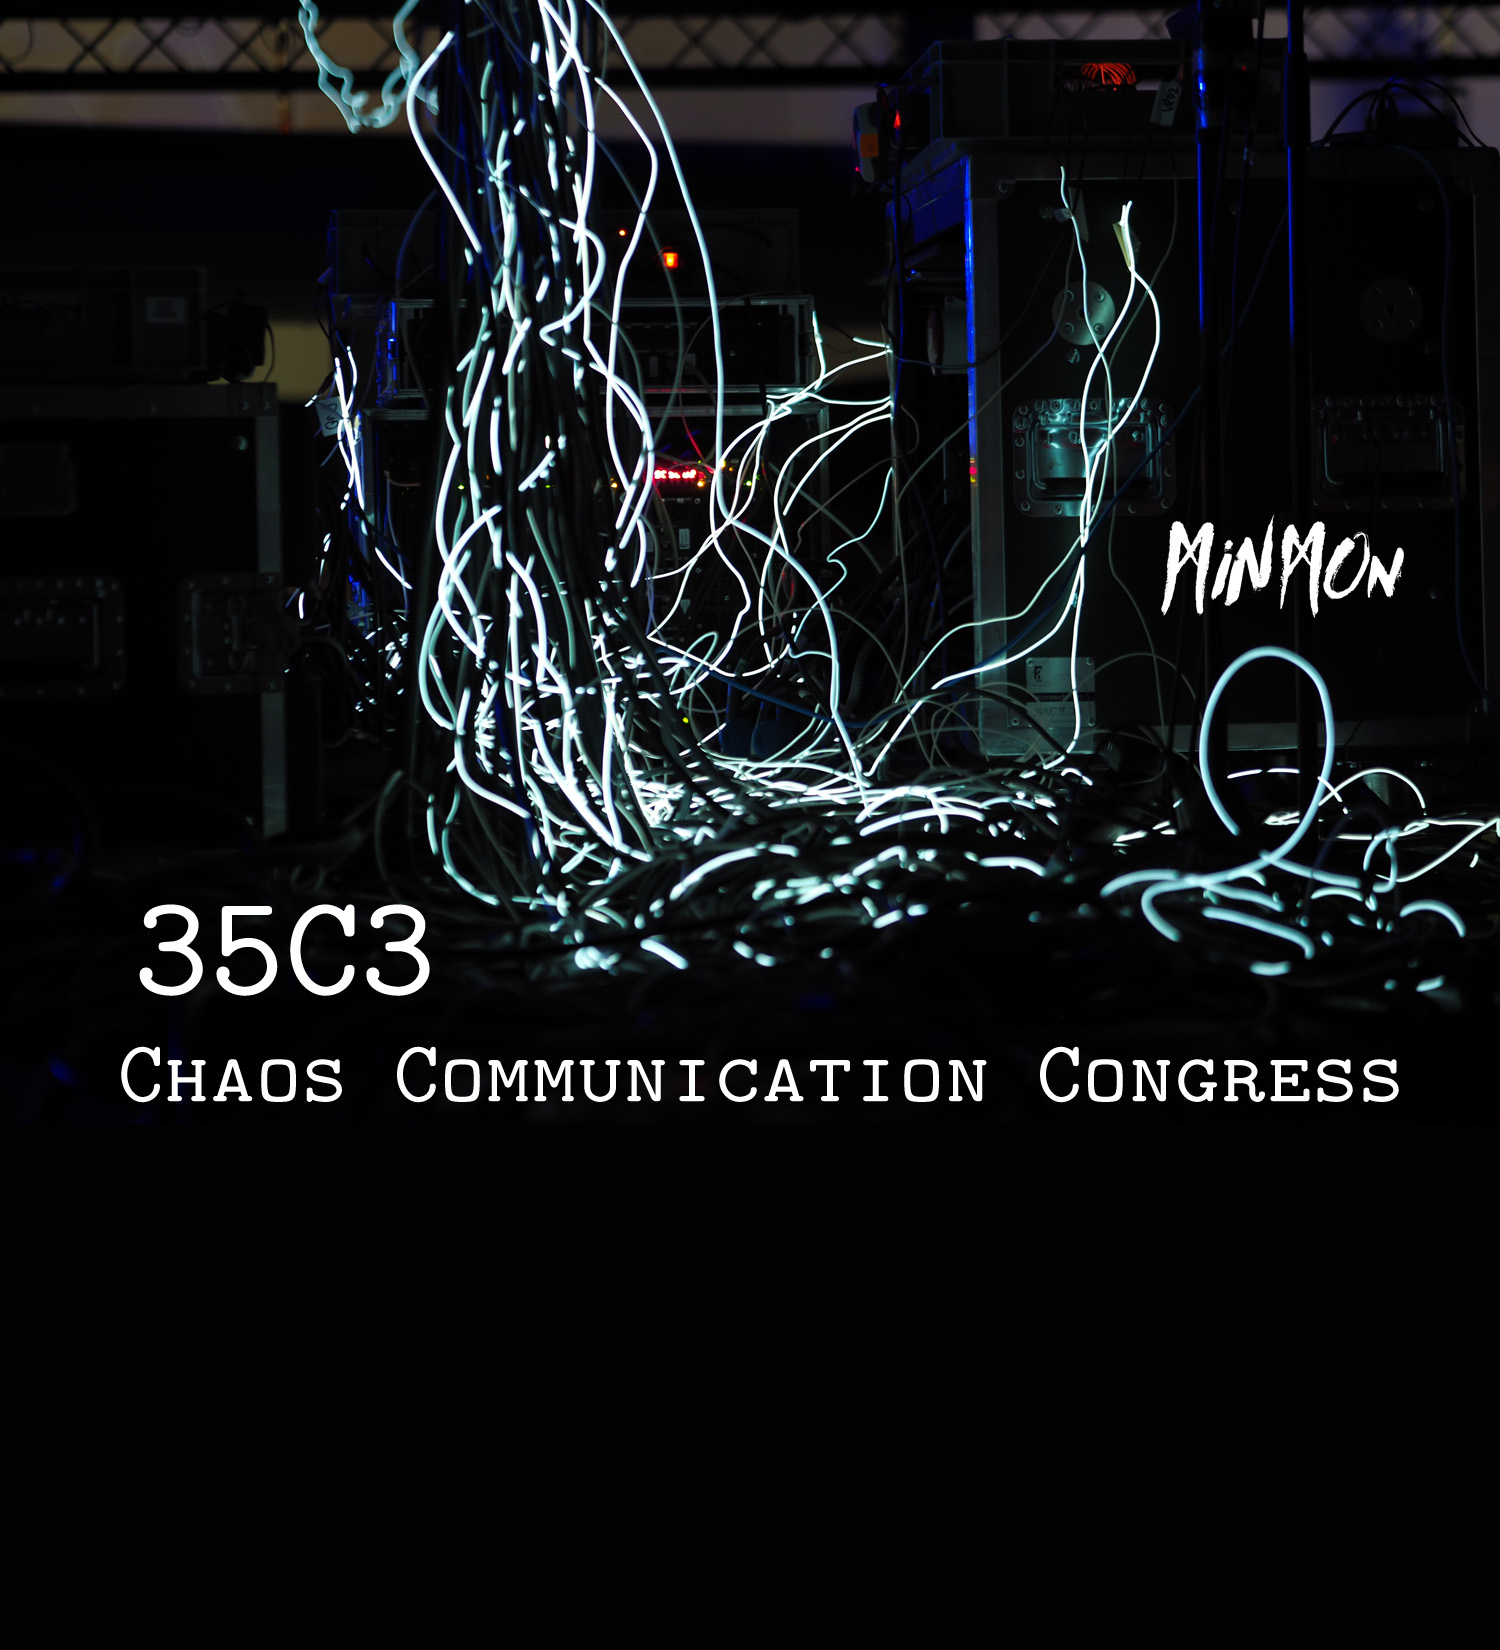 Chaos Communication Congress